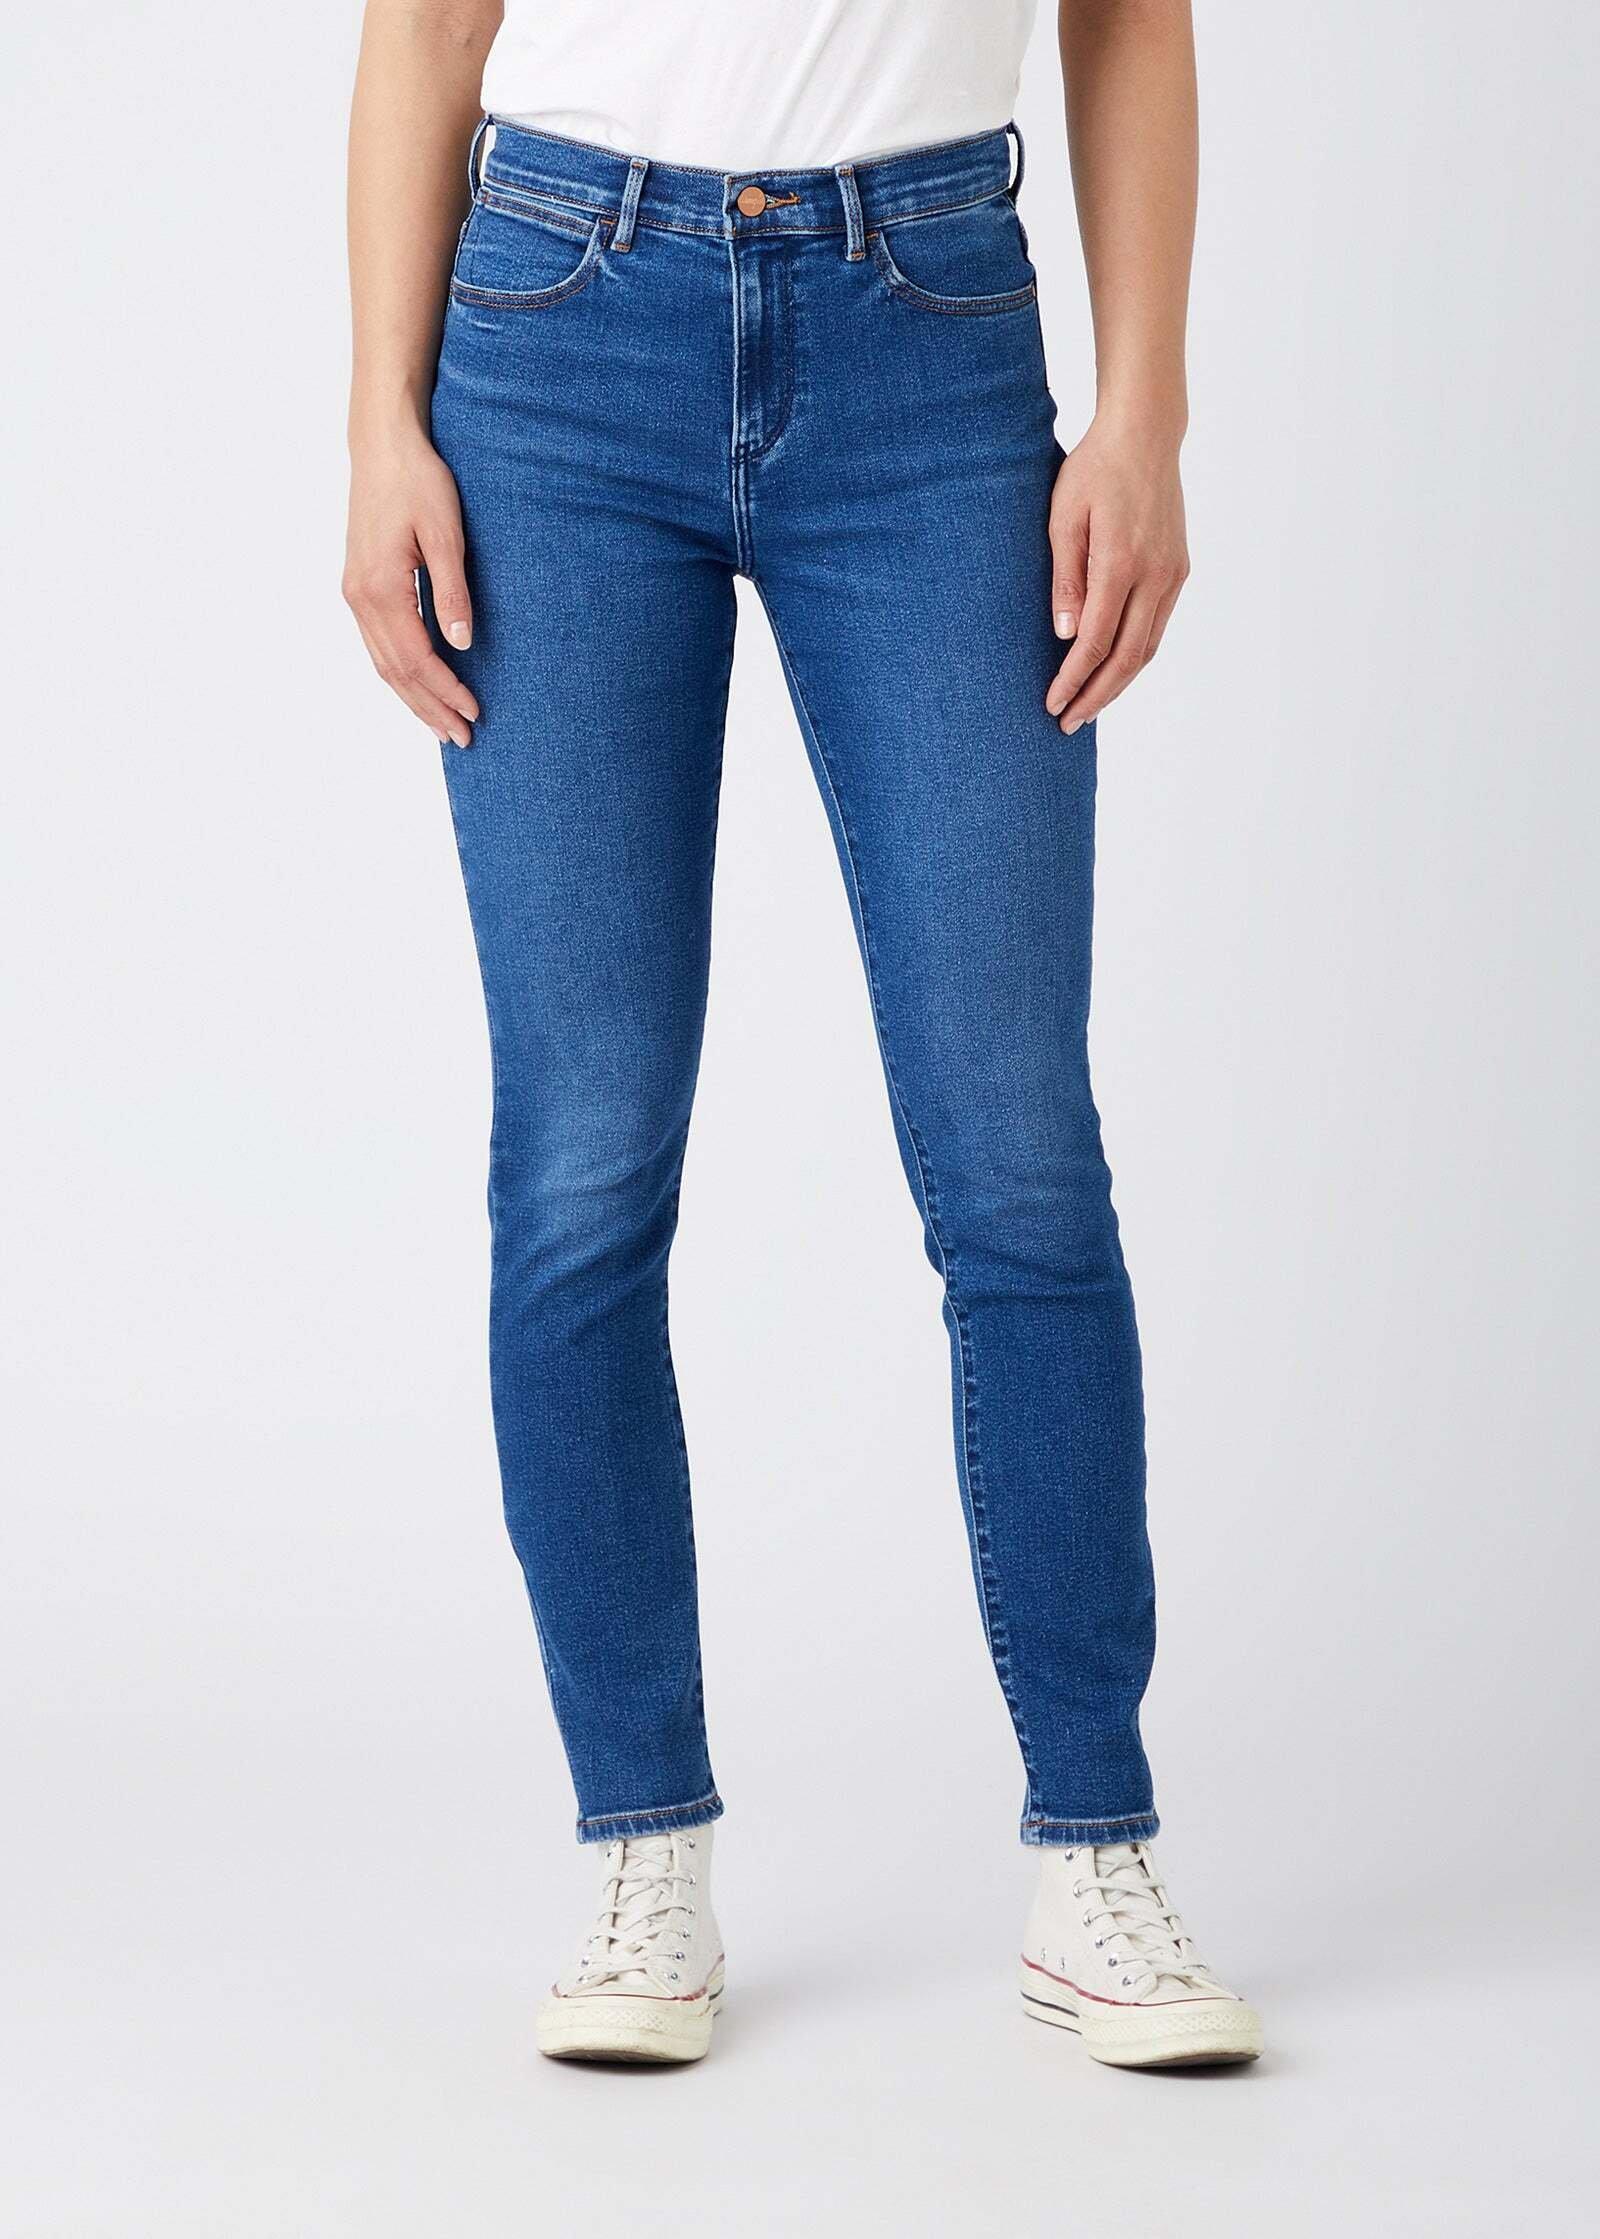 Jeans Skinny Fit High Rise Damen Blau Denim L34/W30 von Wrangler